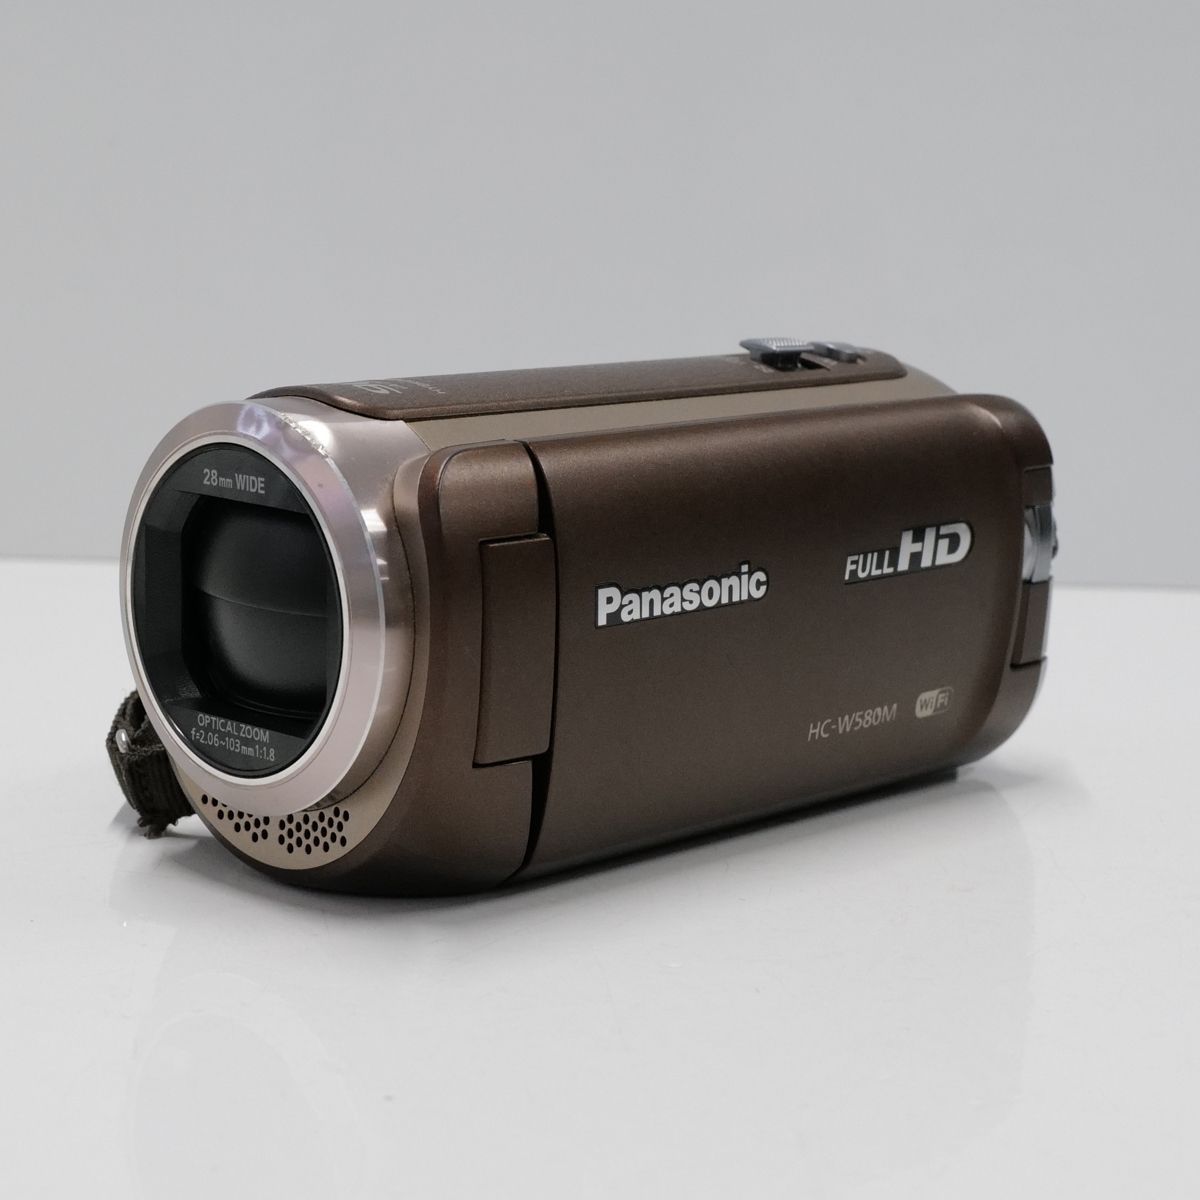 Panasonic パナソニック デジタルビデオカメラ HC-W580M USED美品 本体